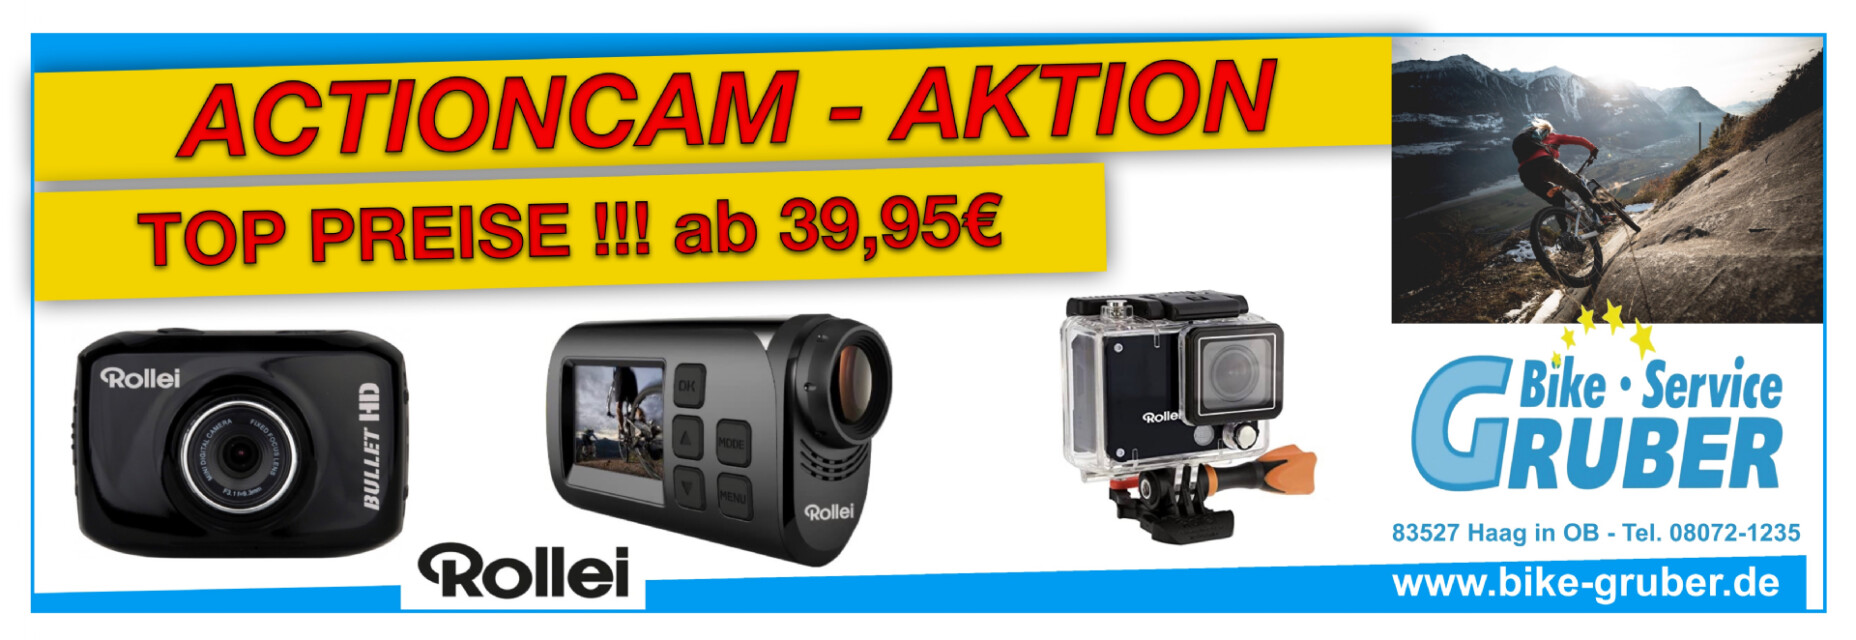 Rollei Actioncam - Sonderpreise